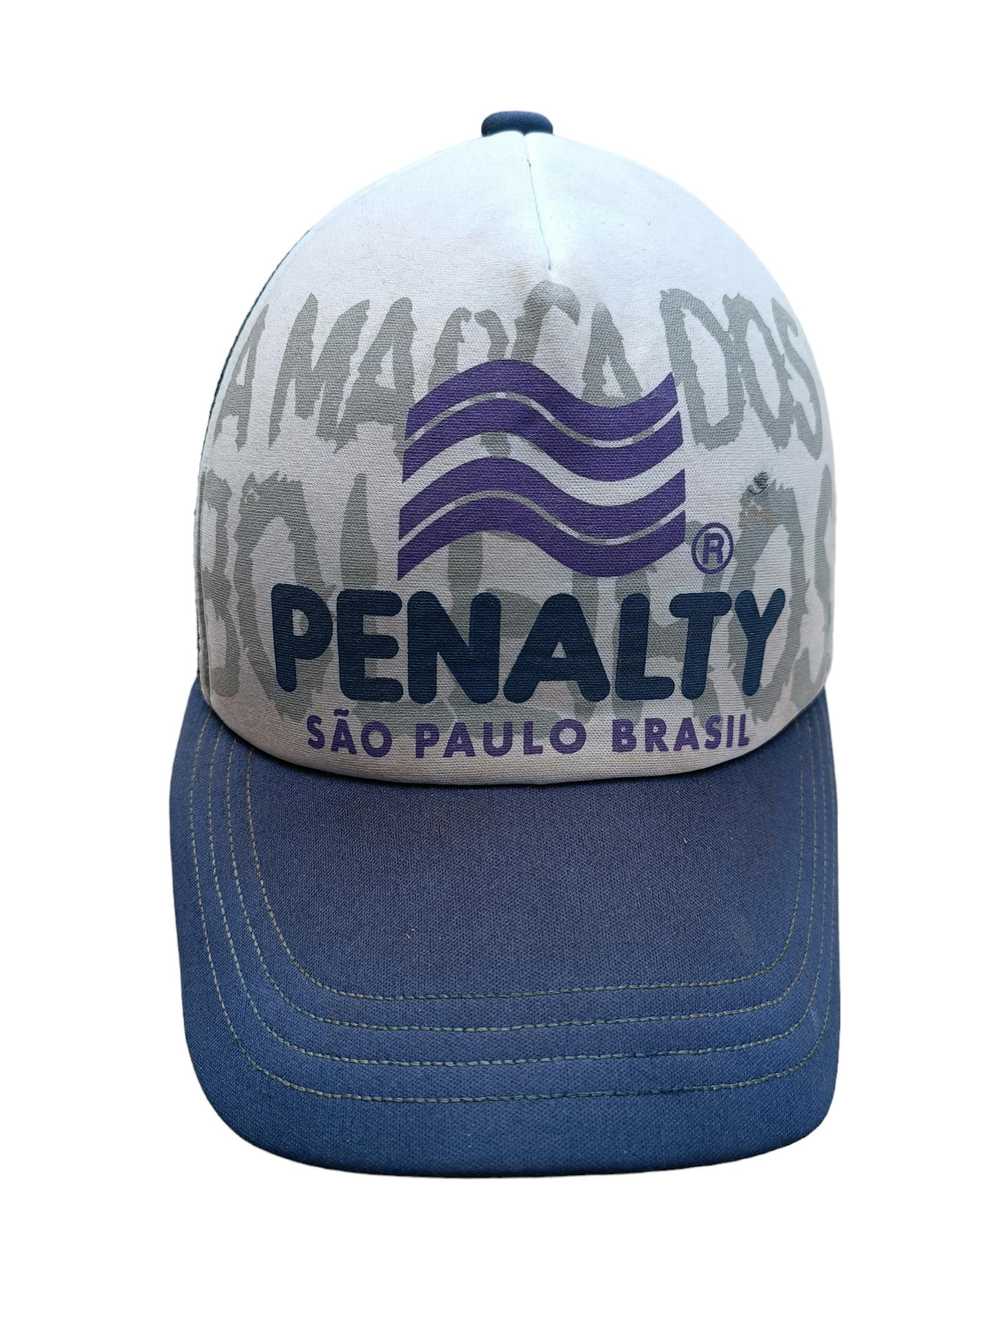 Penalty Brazil × Vintage VINTAGE PENALTY SAO PAUL… - image 1